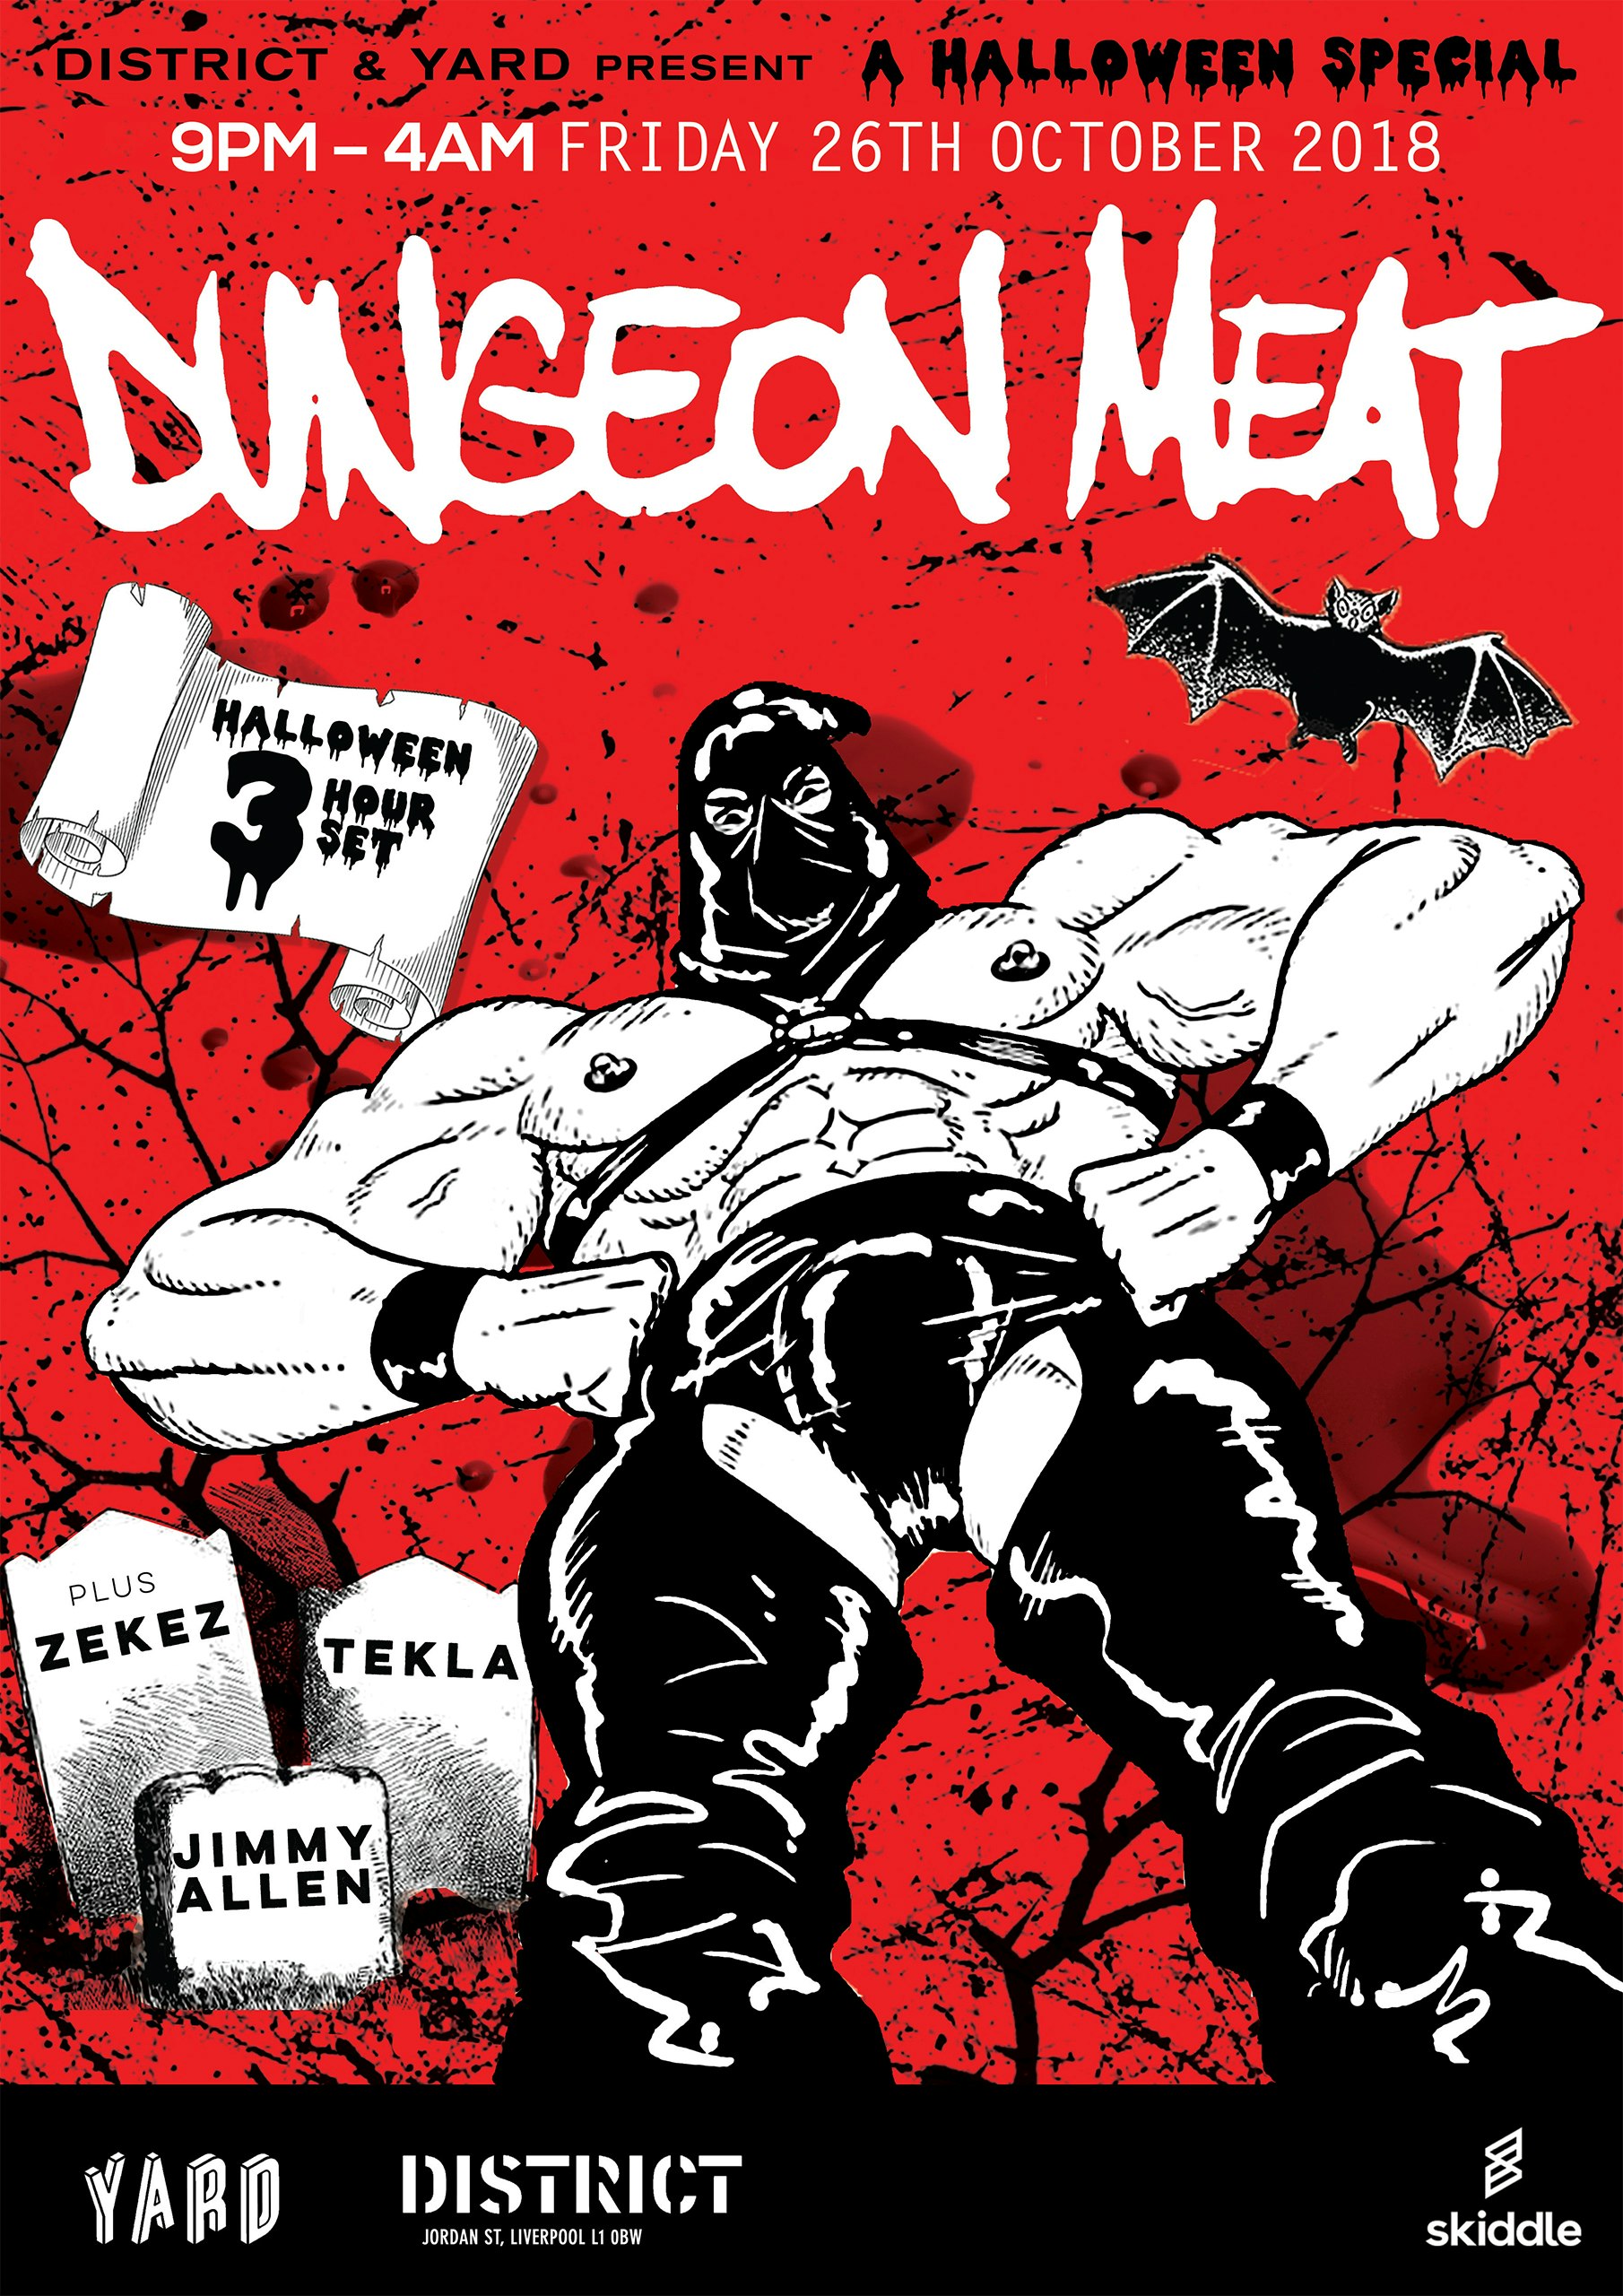 Dan Taylor - Dungeon Meat (sic)